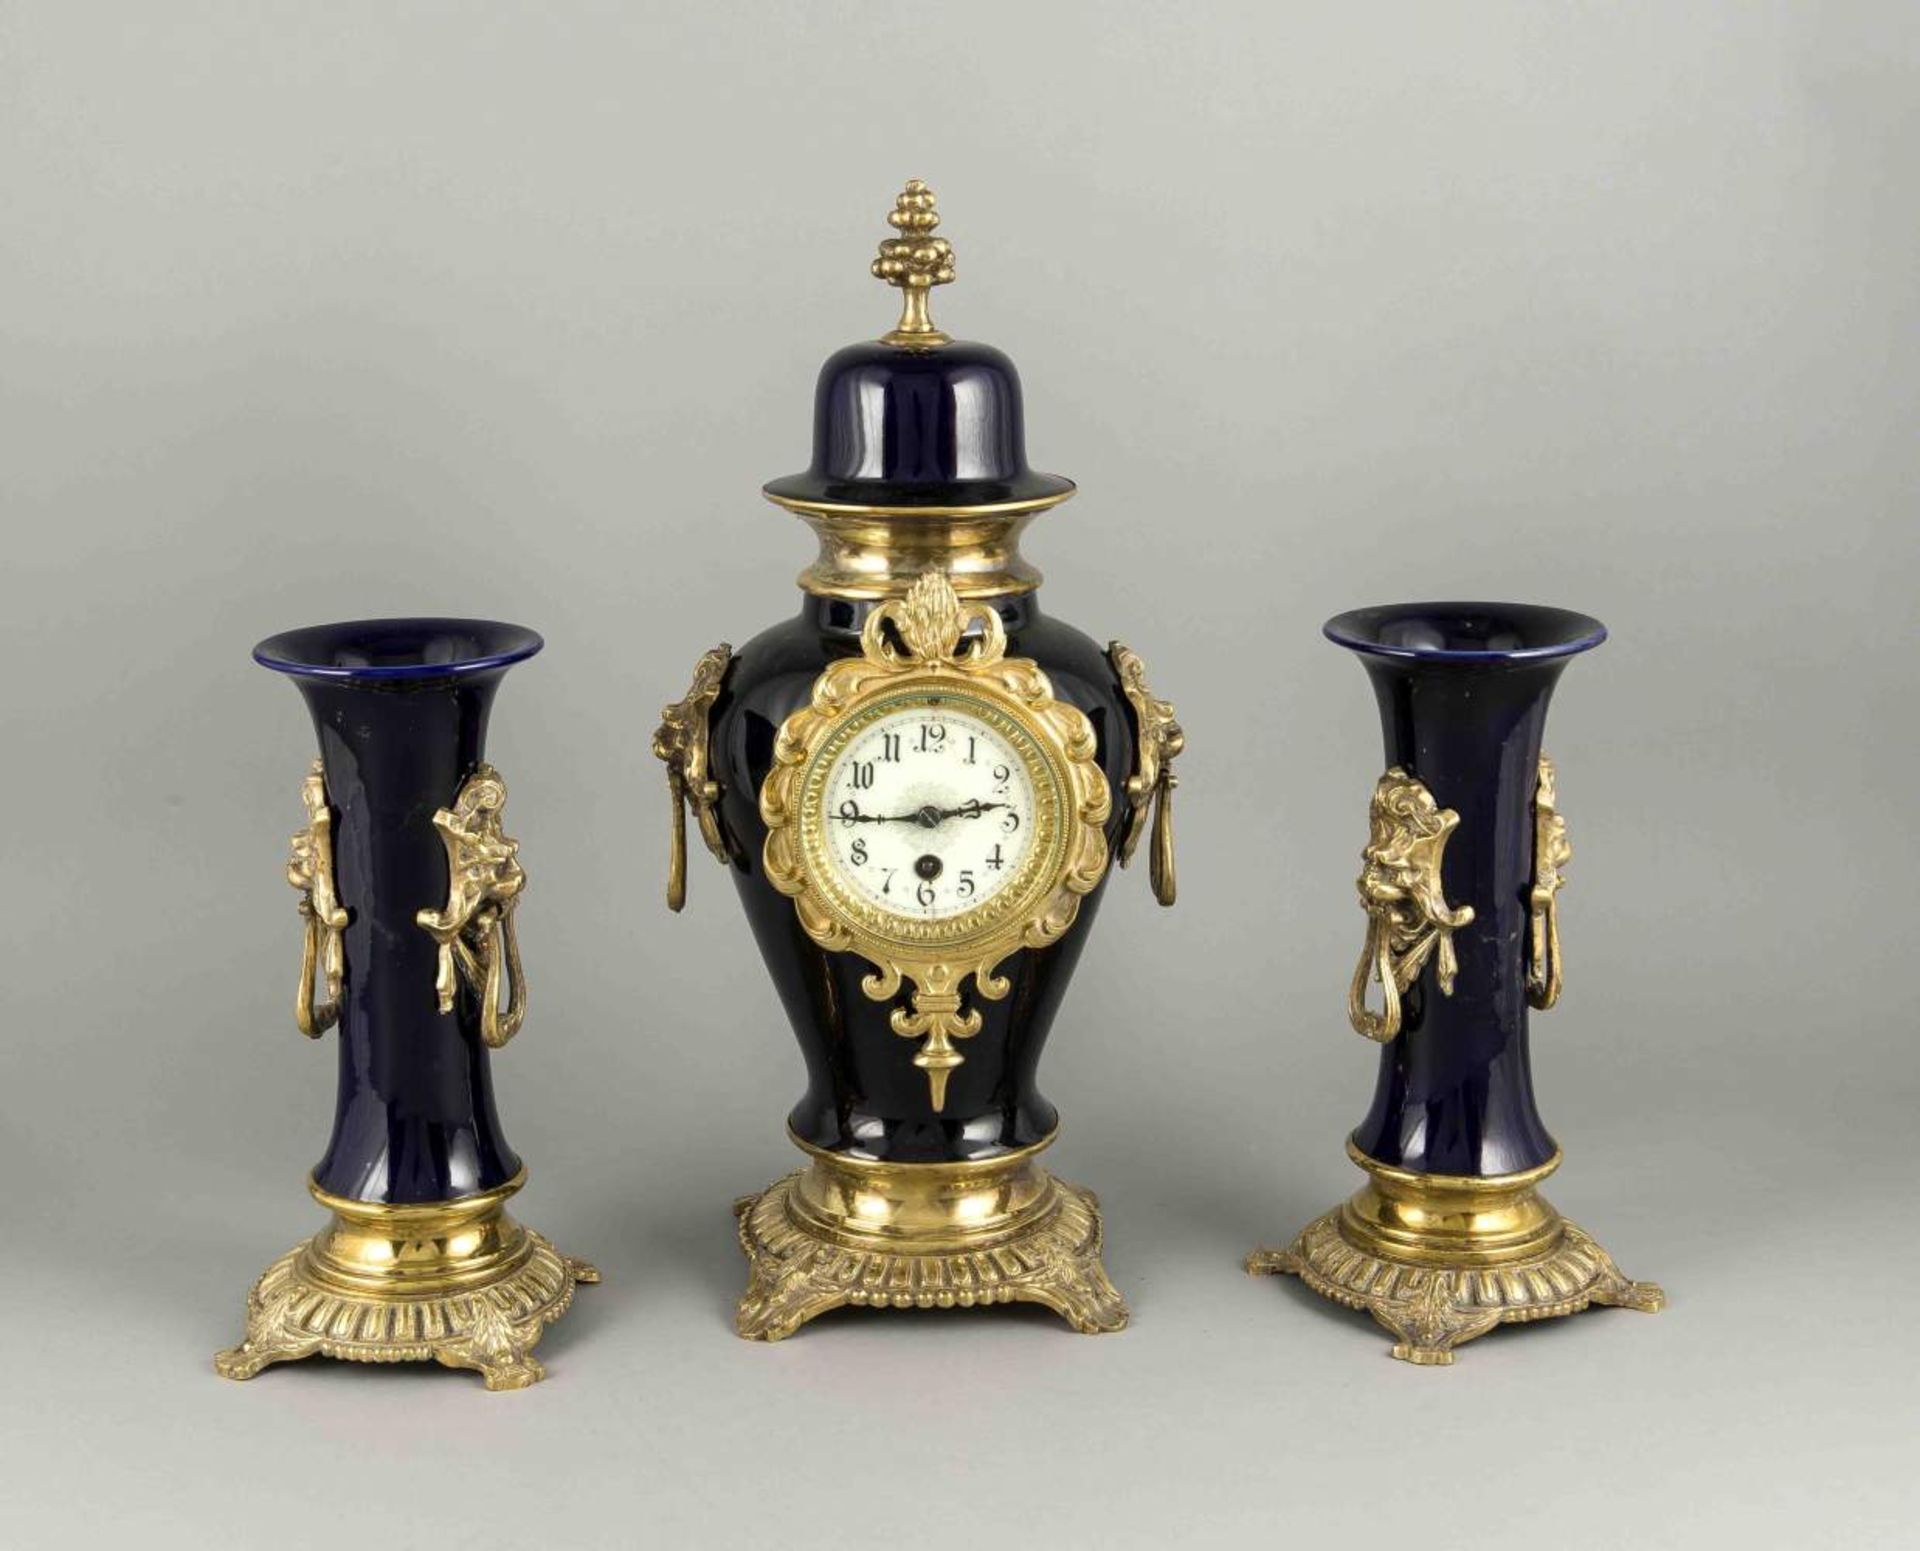 Antique blue ceramic clocks set with gilt bronze mounts and quiet French clock, circa 1870, in